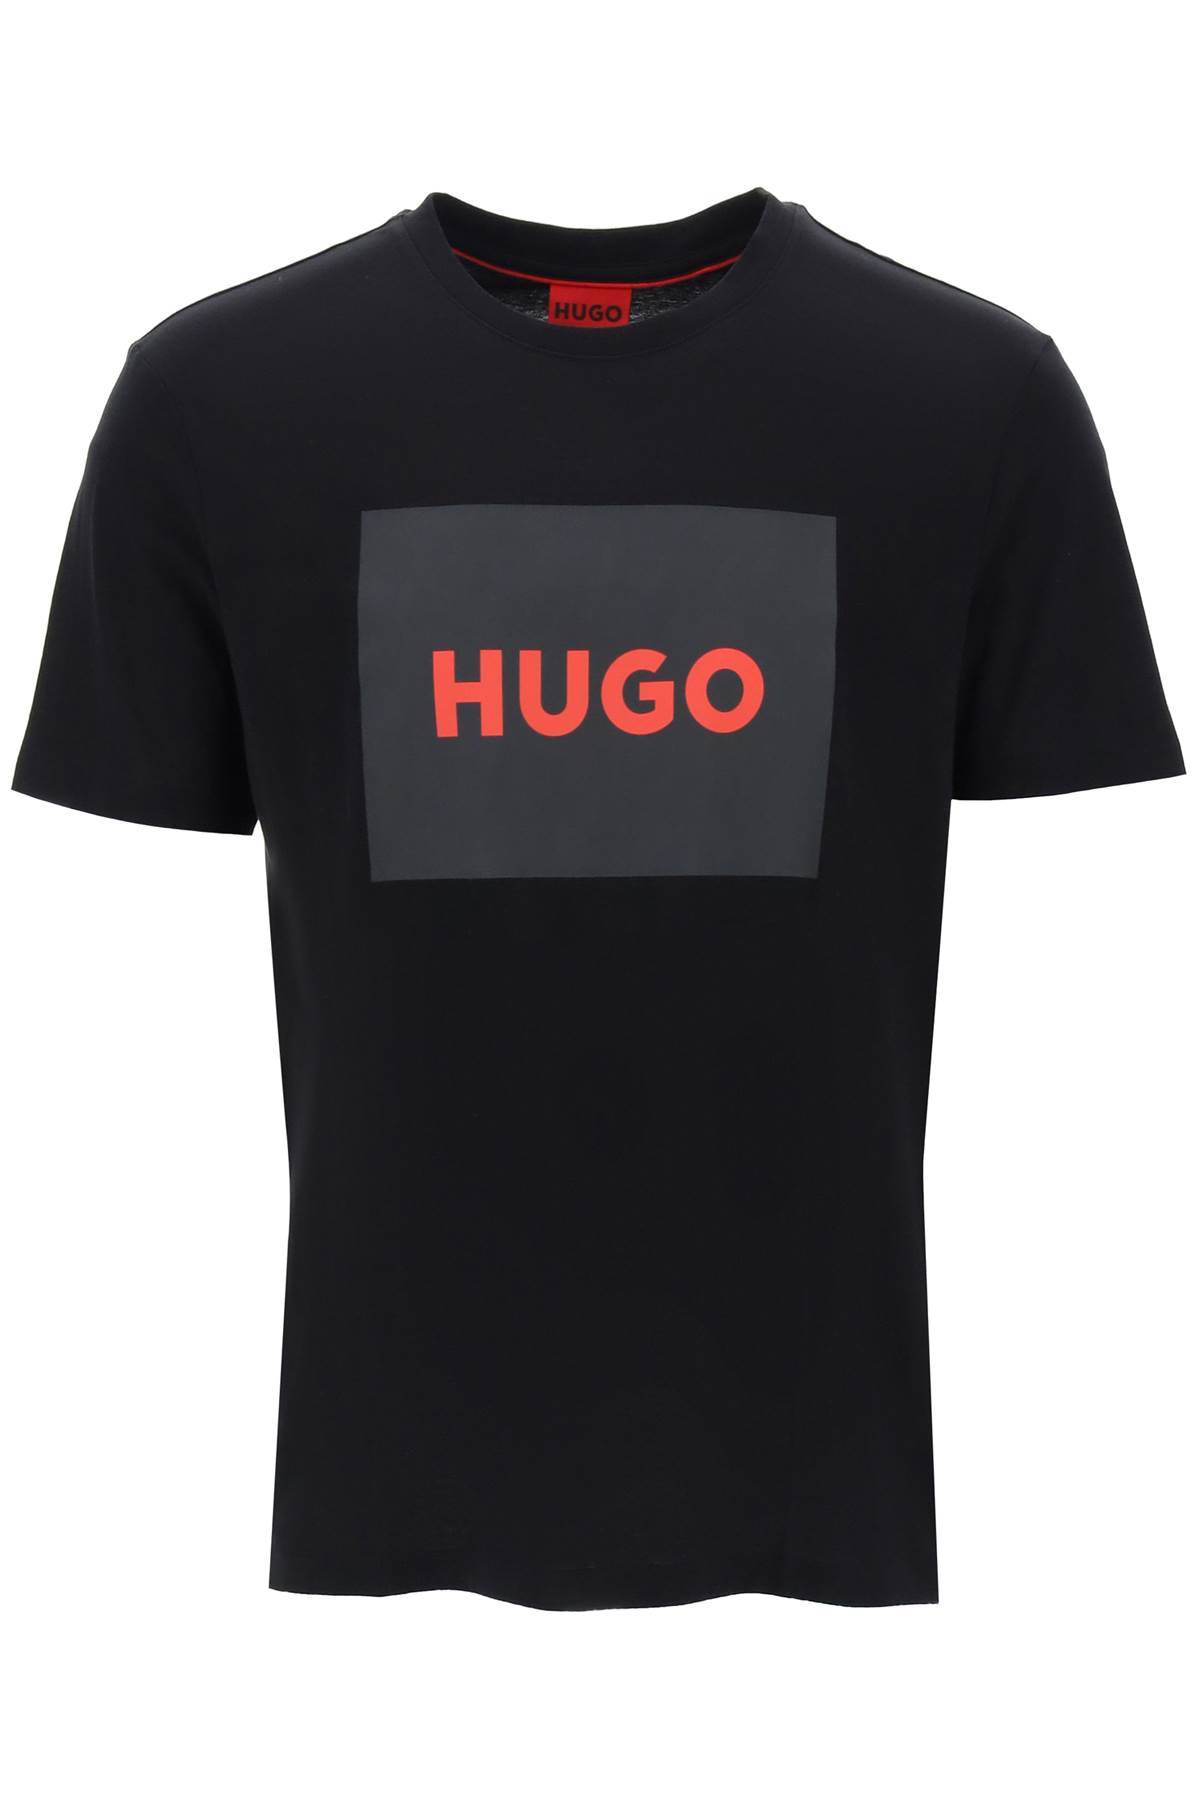 Hugo HUGO dulive t-shirt with logo box